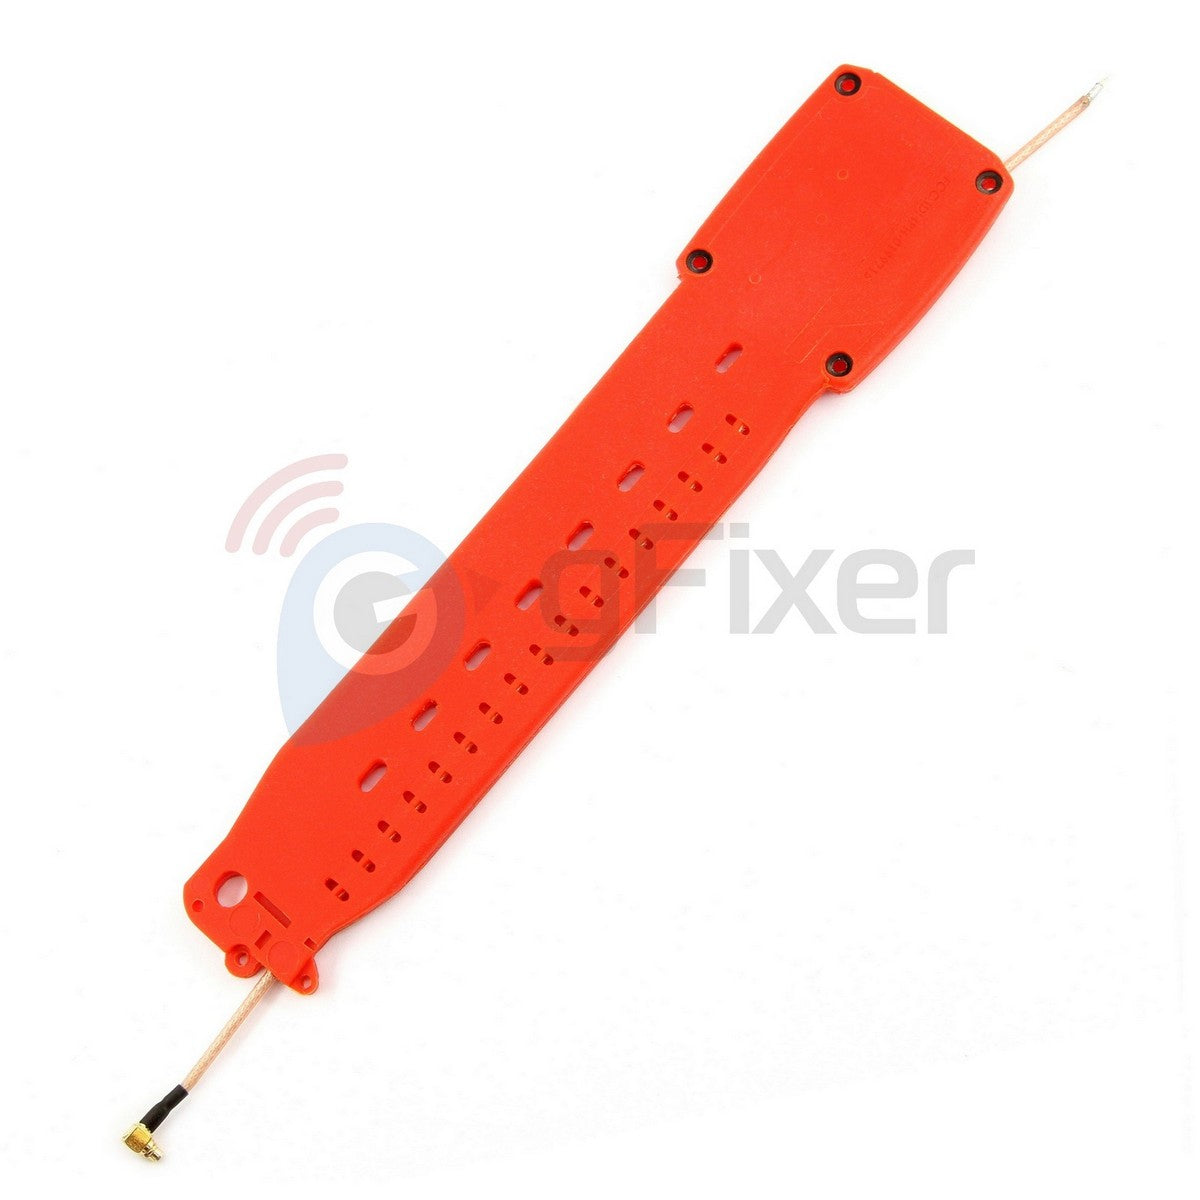 New Rubber band for GPS Antenna on collar Garmin DC 50 (orange FLEXI+) part DC50